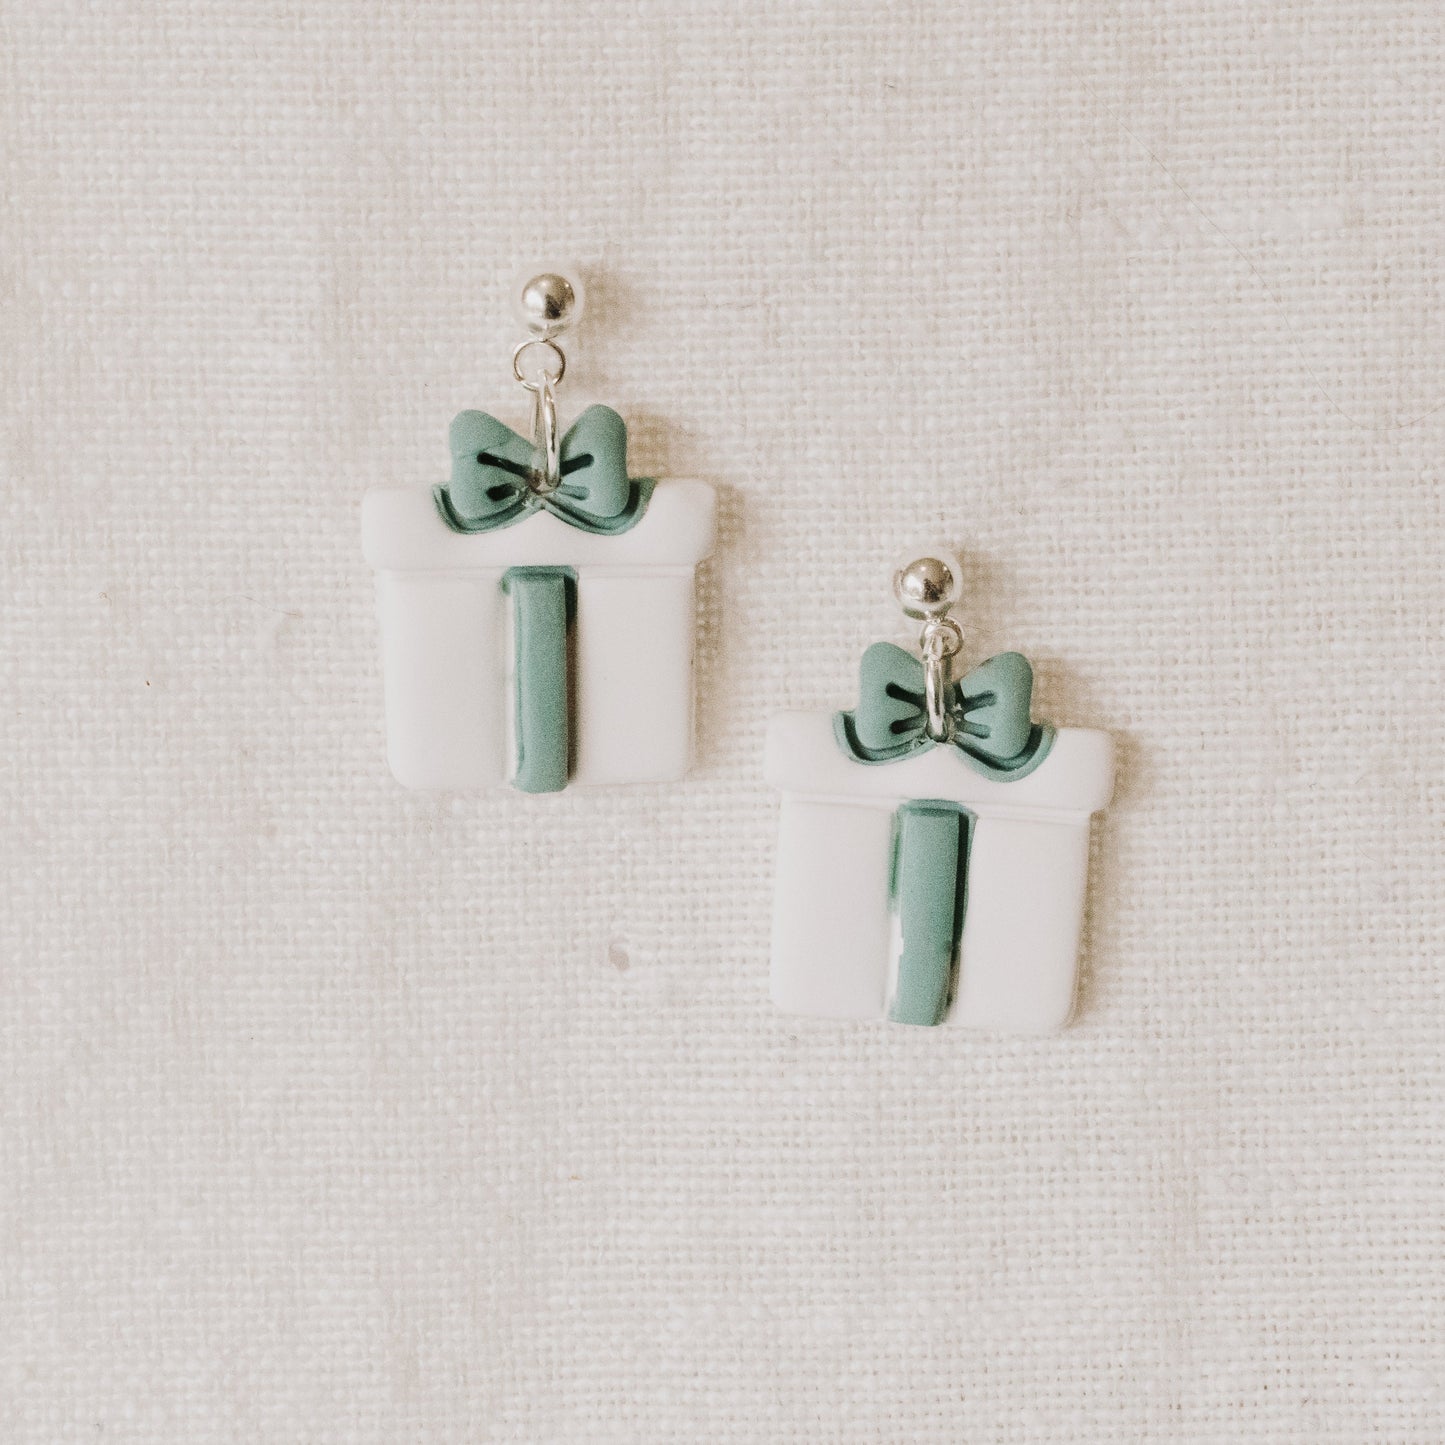 Soft Green Christmas Present Box Earrings - Claymore NZ-Earrings